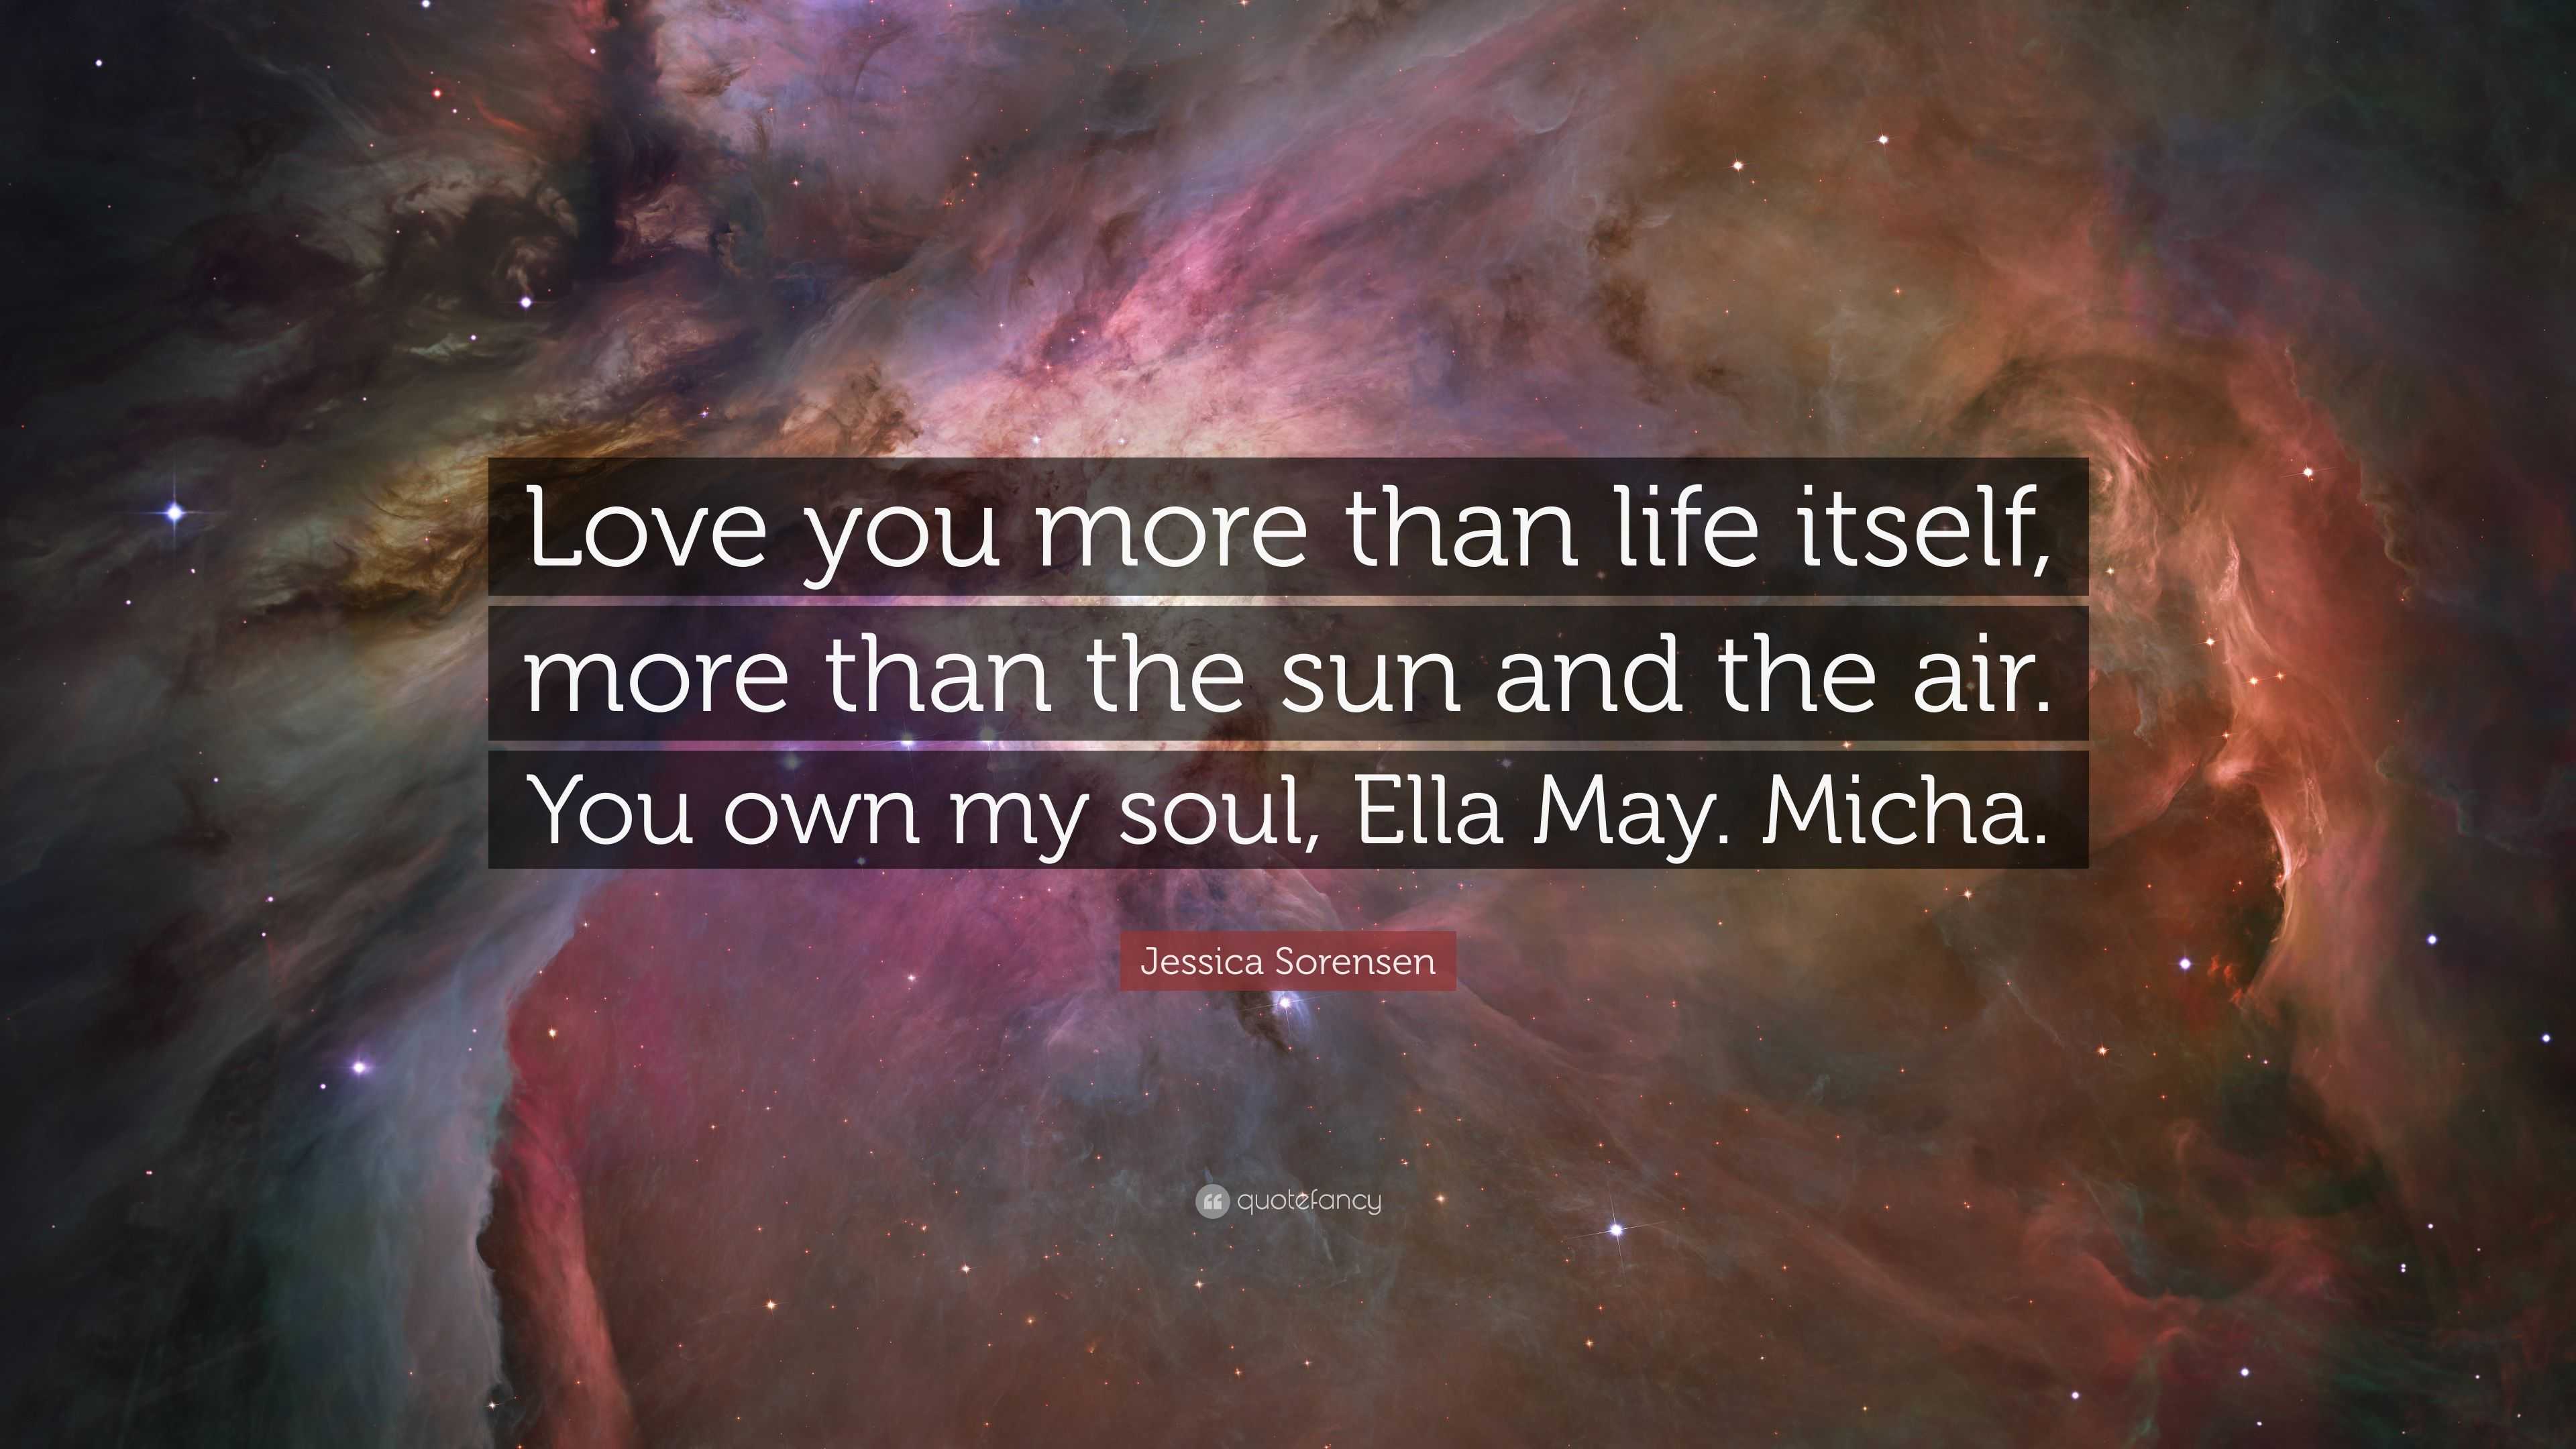 Jessica Sorensen Quote “Love you more than life itself more than the sun